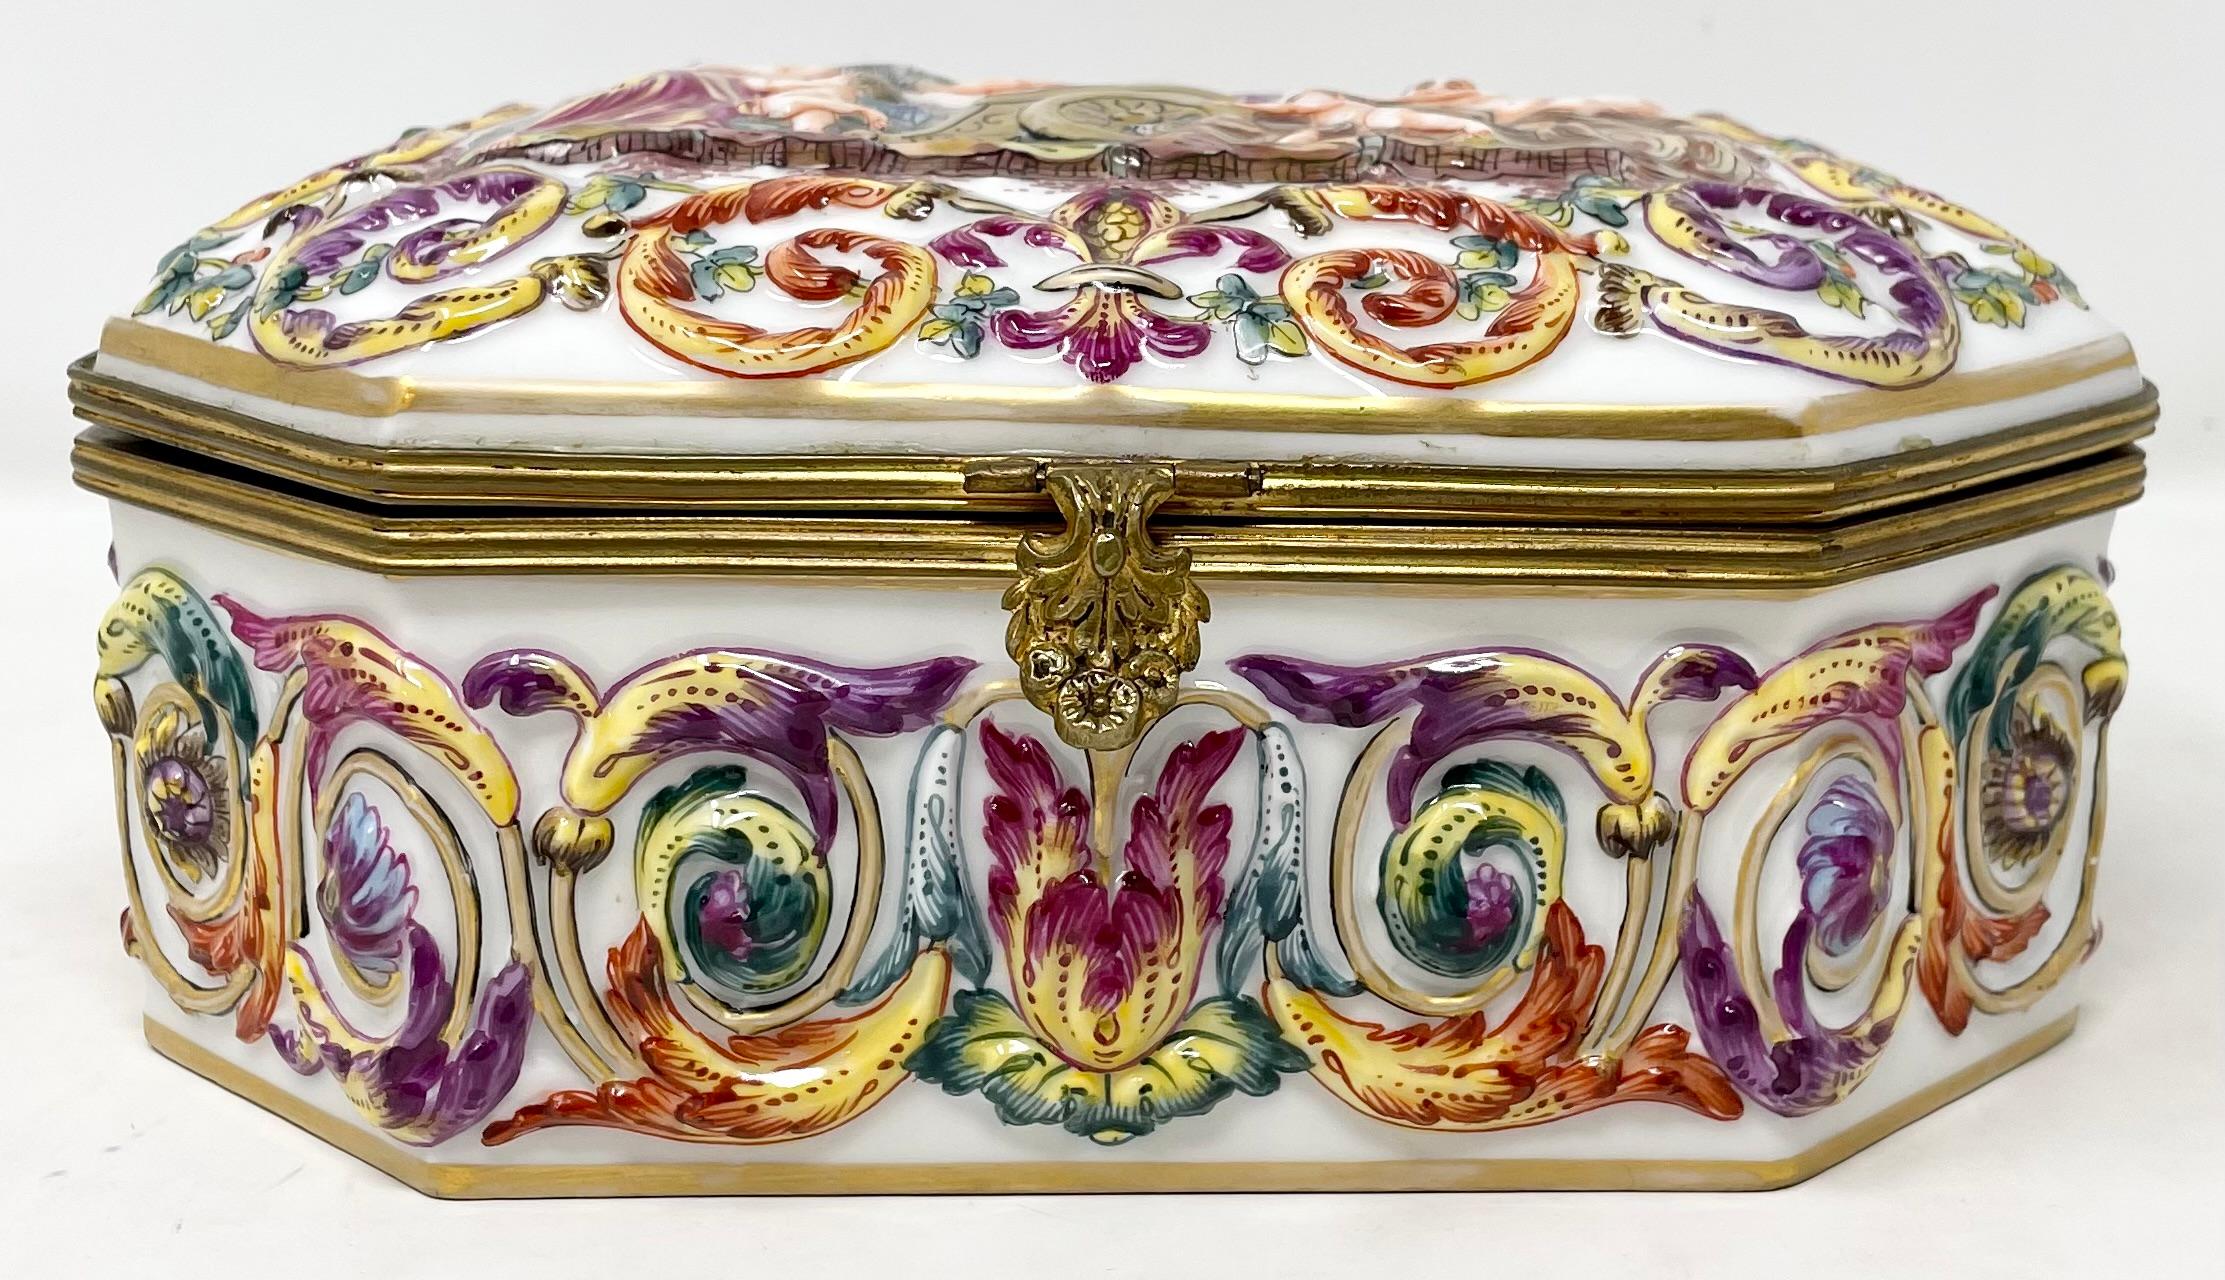 Antique Italian Capo di Monte hand-painted porcelain jewel box, circa 1900's.